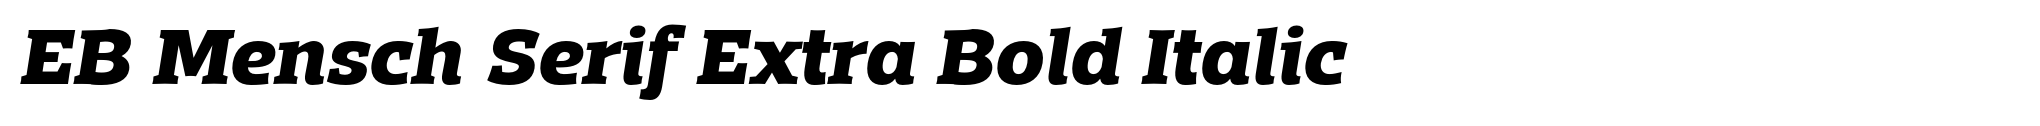 EB Mensch Serif Extra Bold Italic image